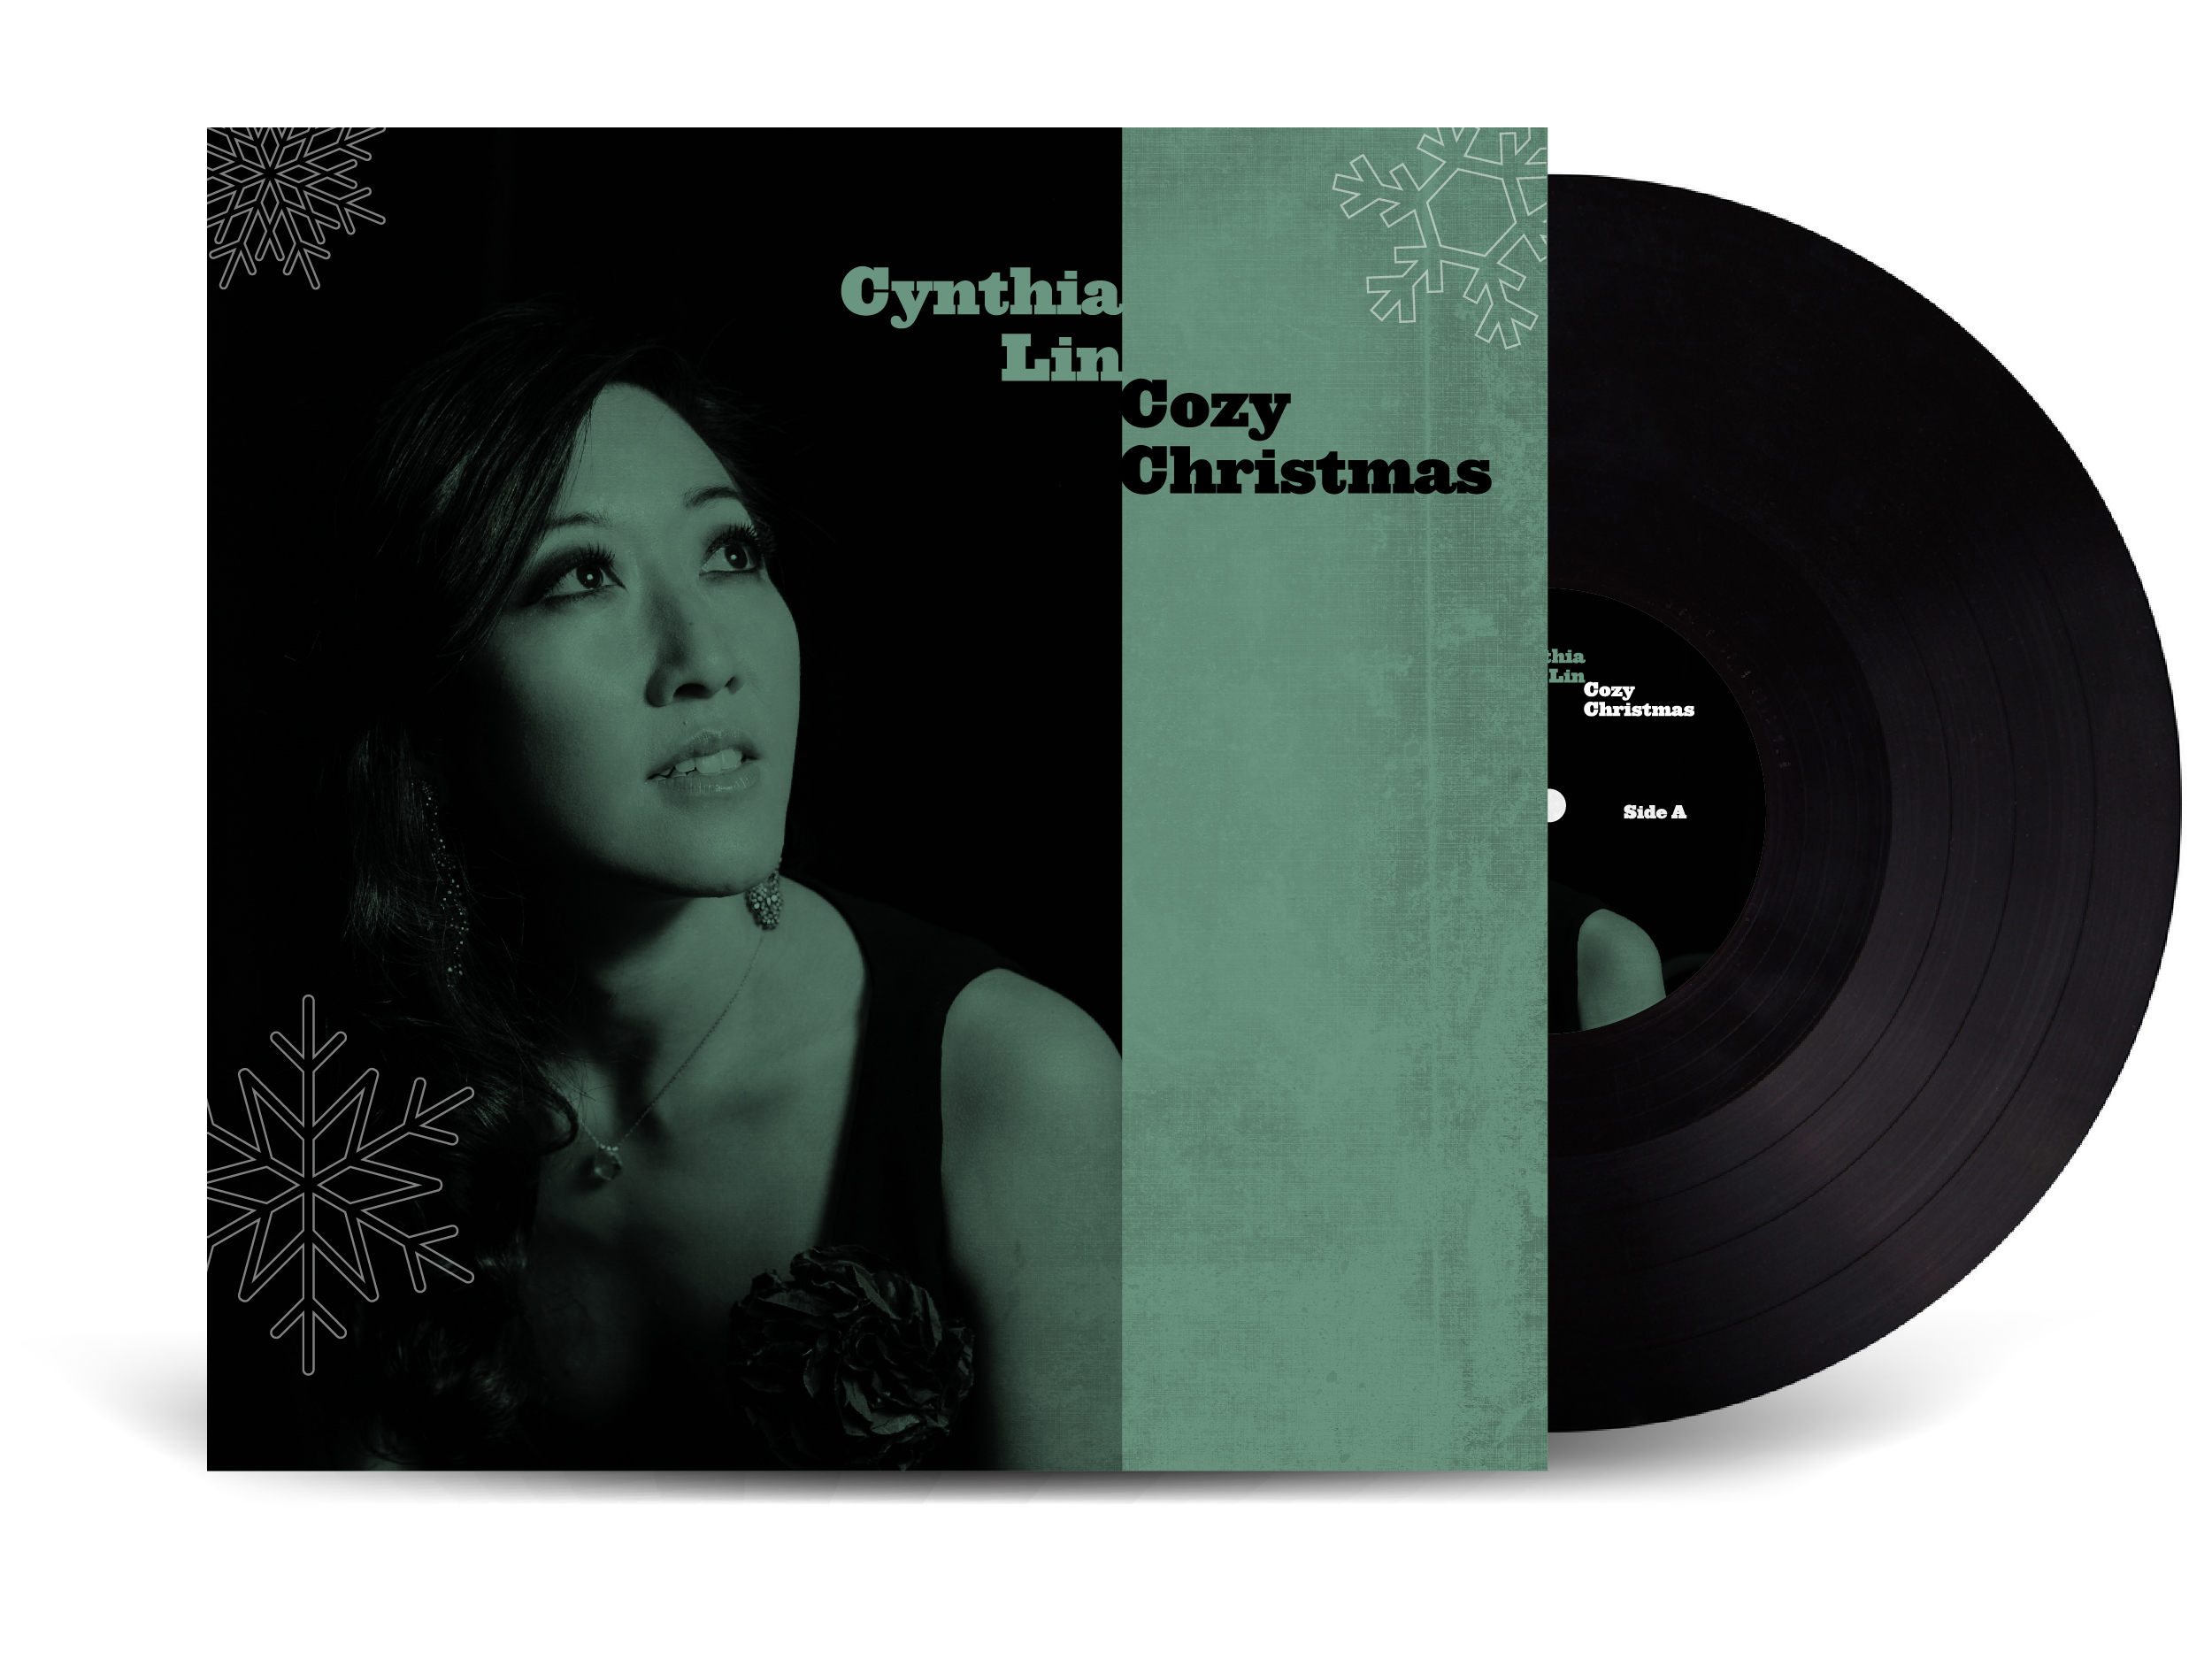 Cozy Christmas album cover and vinyl record